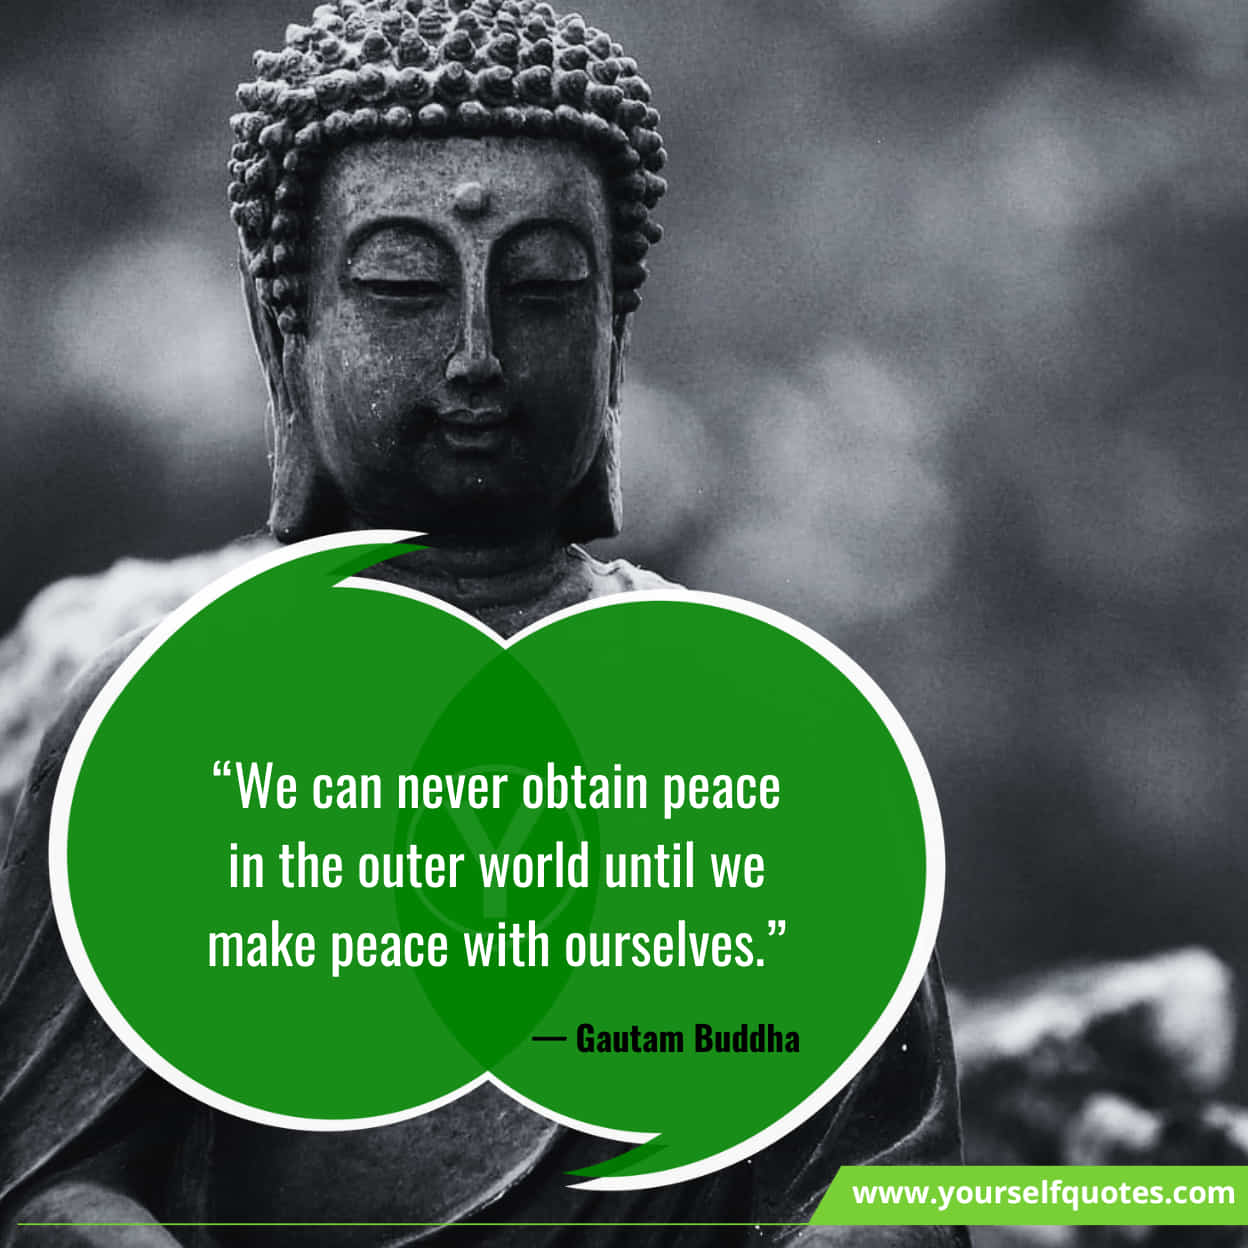 Gautam Buddha Quotes For Peace